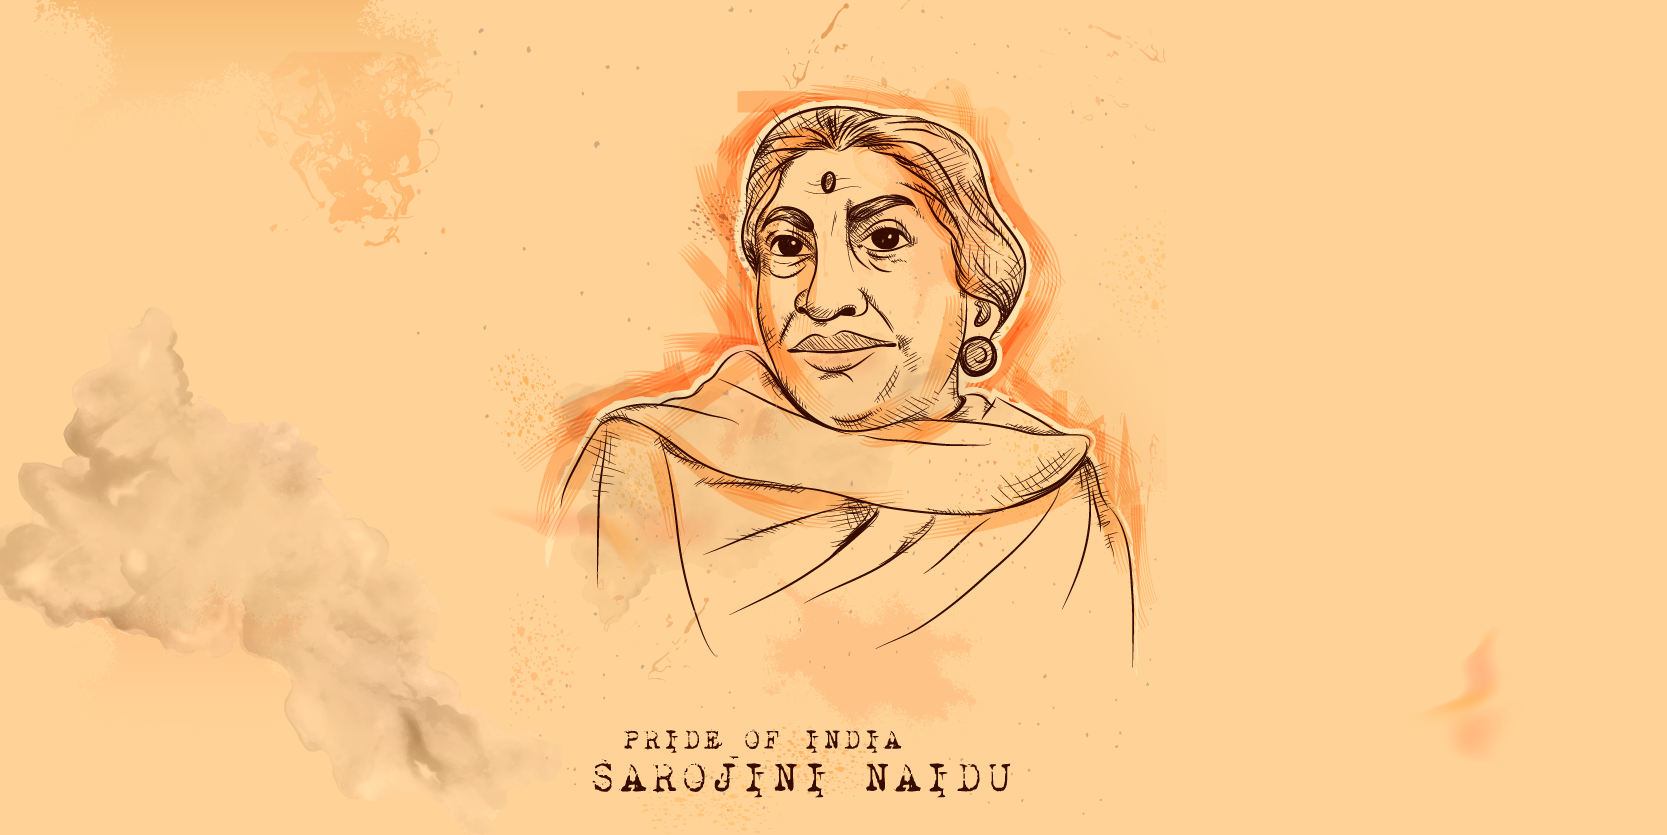 Sarojini Naidu: Pioneer, poet, and politician